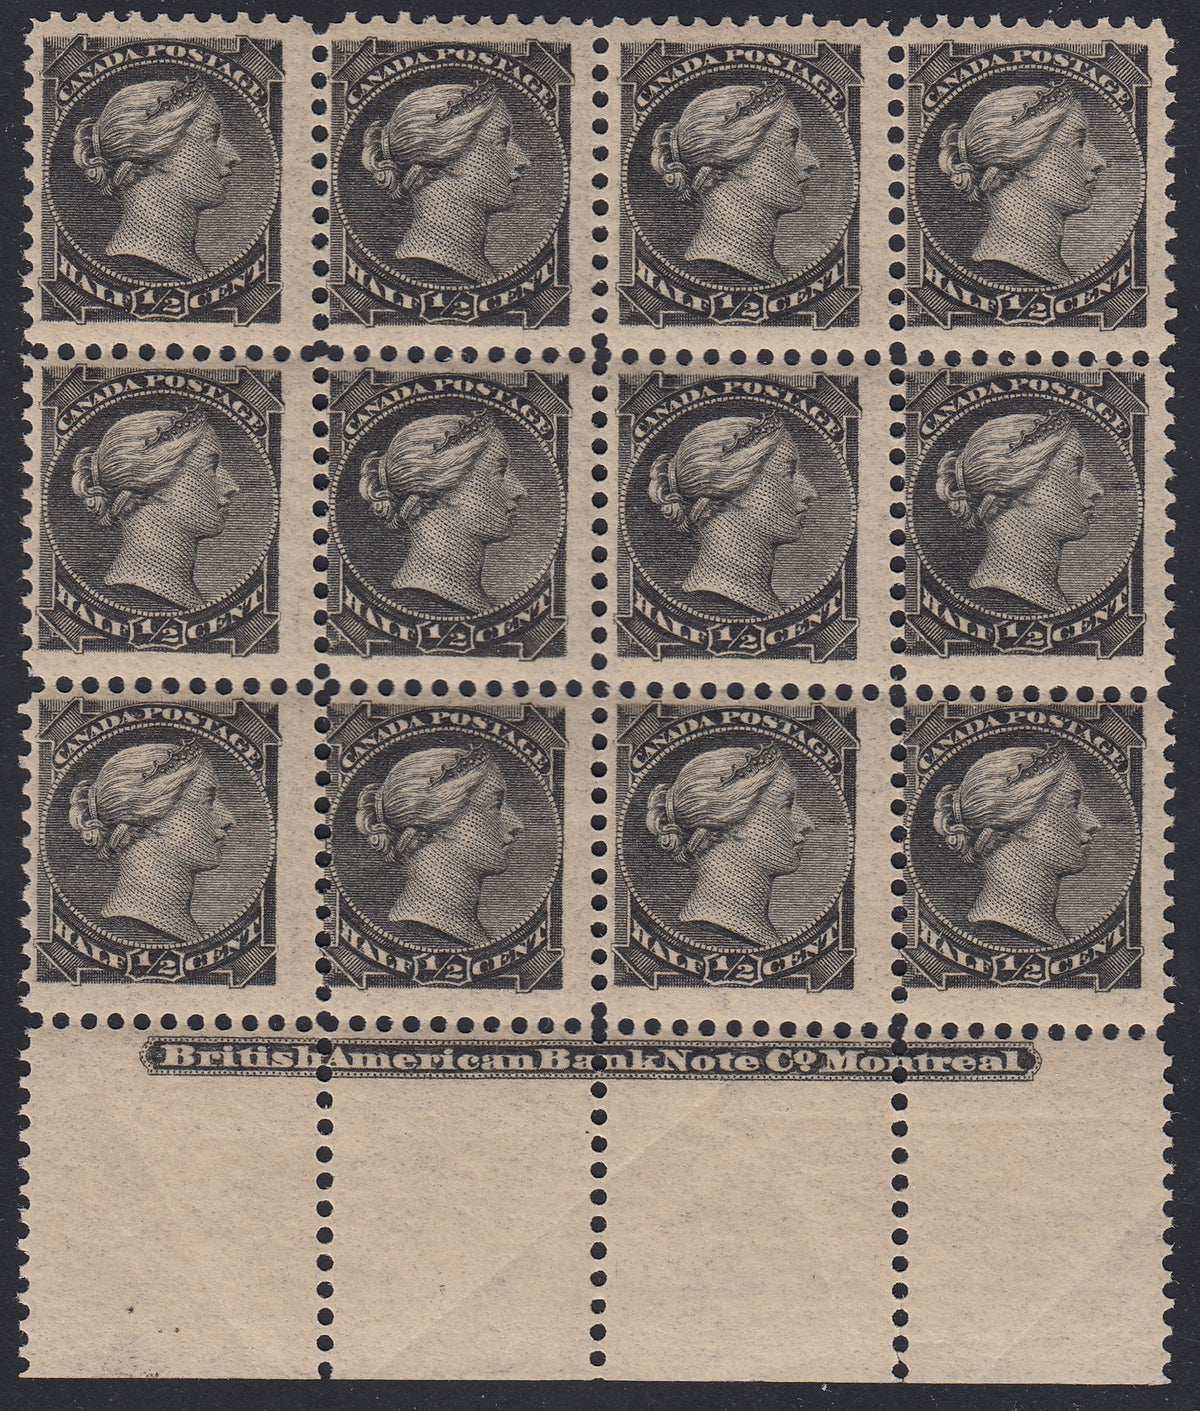 0034CA1801 - Canada #34 Mint Plate Block of 12